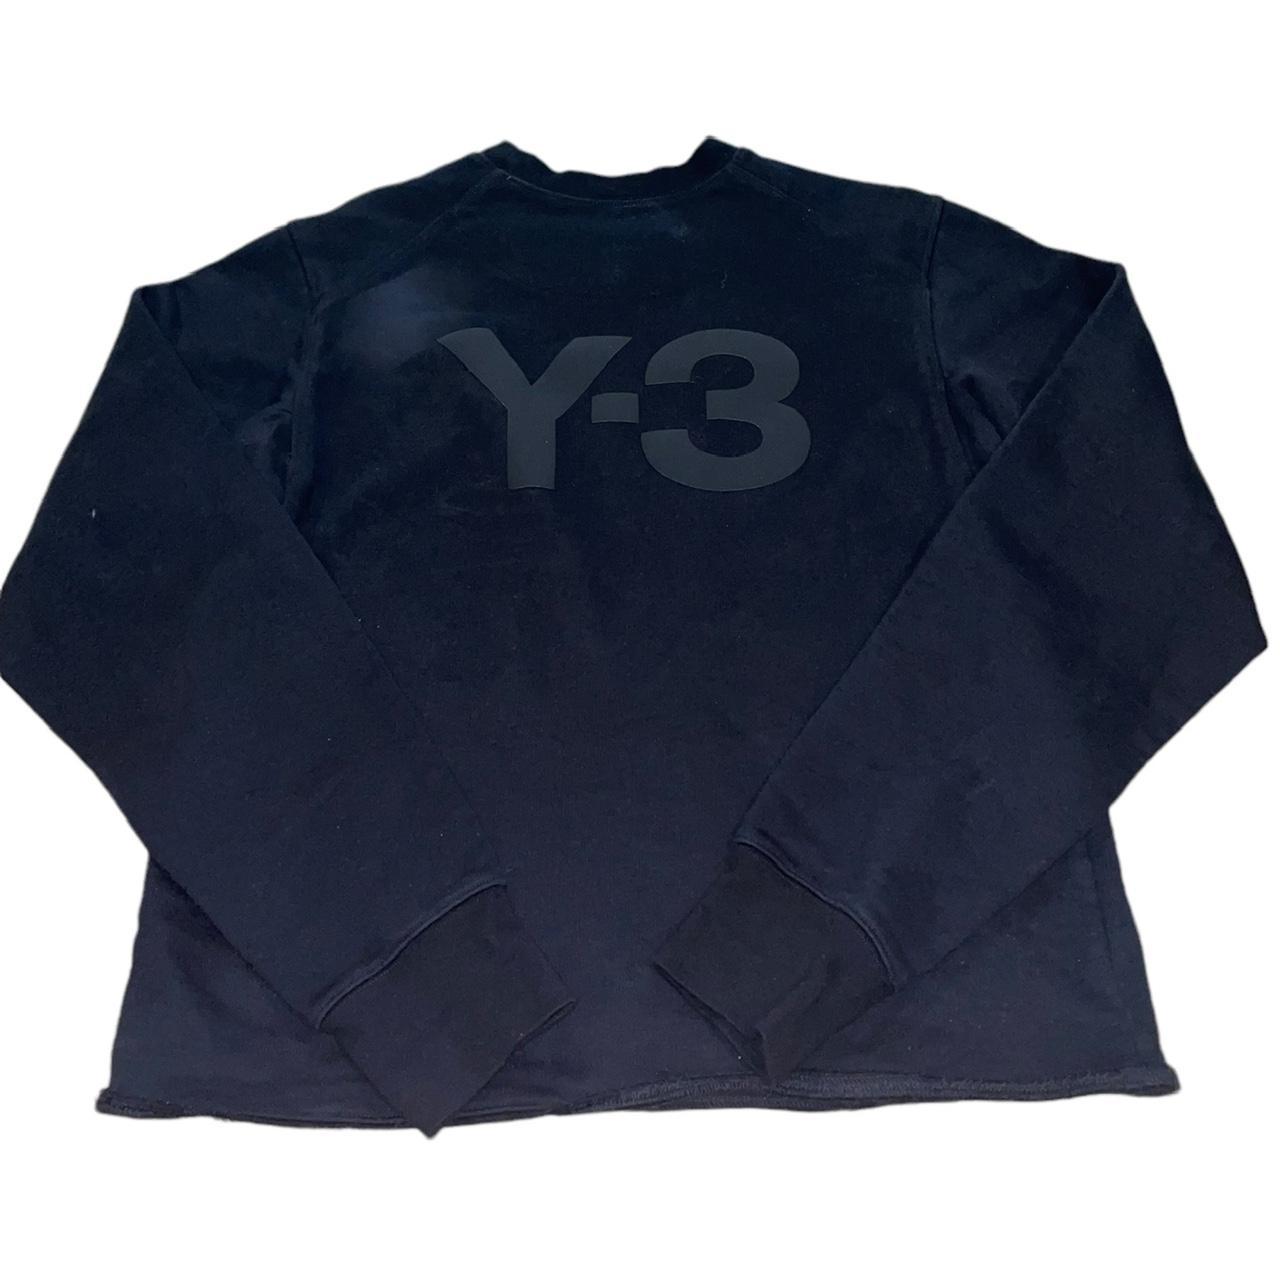 Product Image 1 - Y-3 mens M black sweatshirt